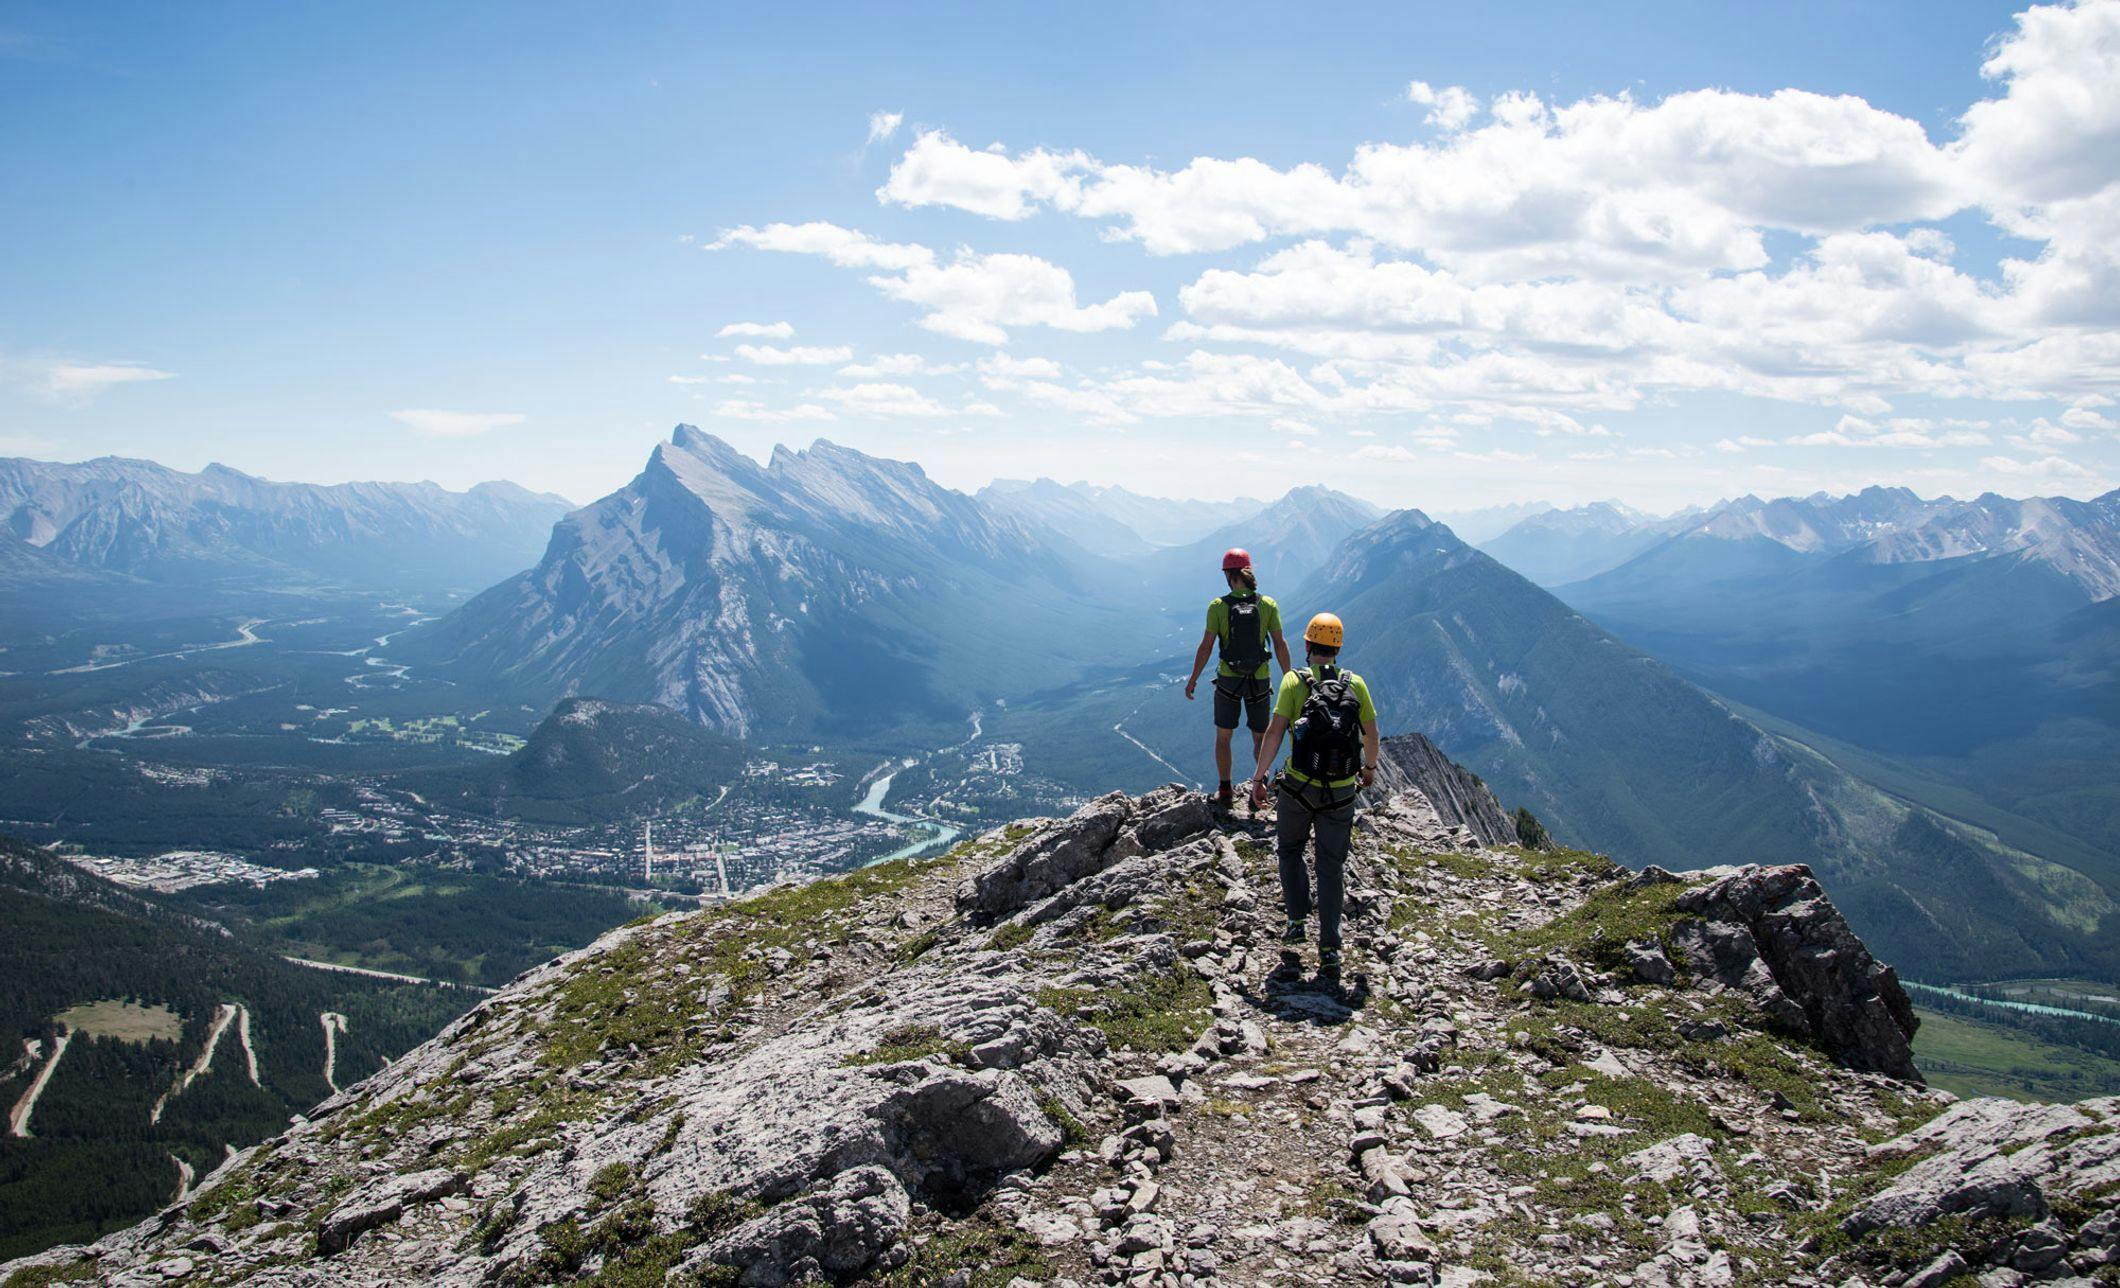 Climbers reach the summit of the Mt. Norquay Via Ferrata, Banff National Park, AB